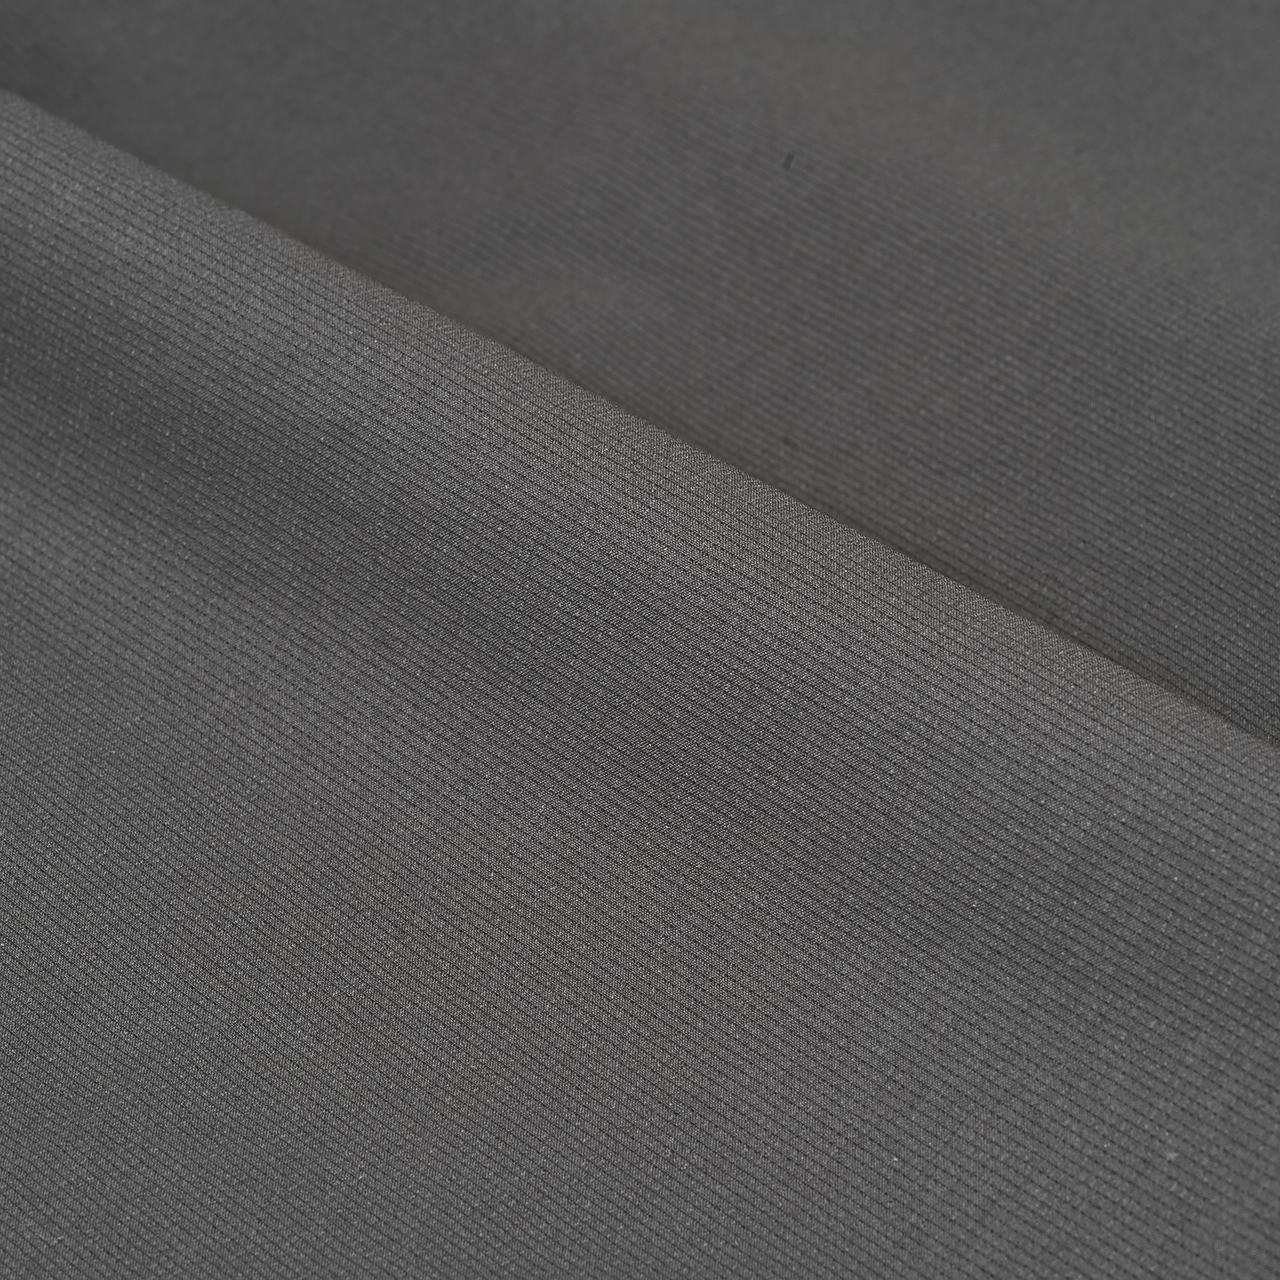 Basic Long Sleeve Shirt | RIDGE MOUNTAIN GEAR